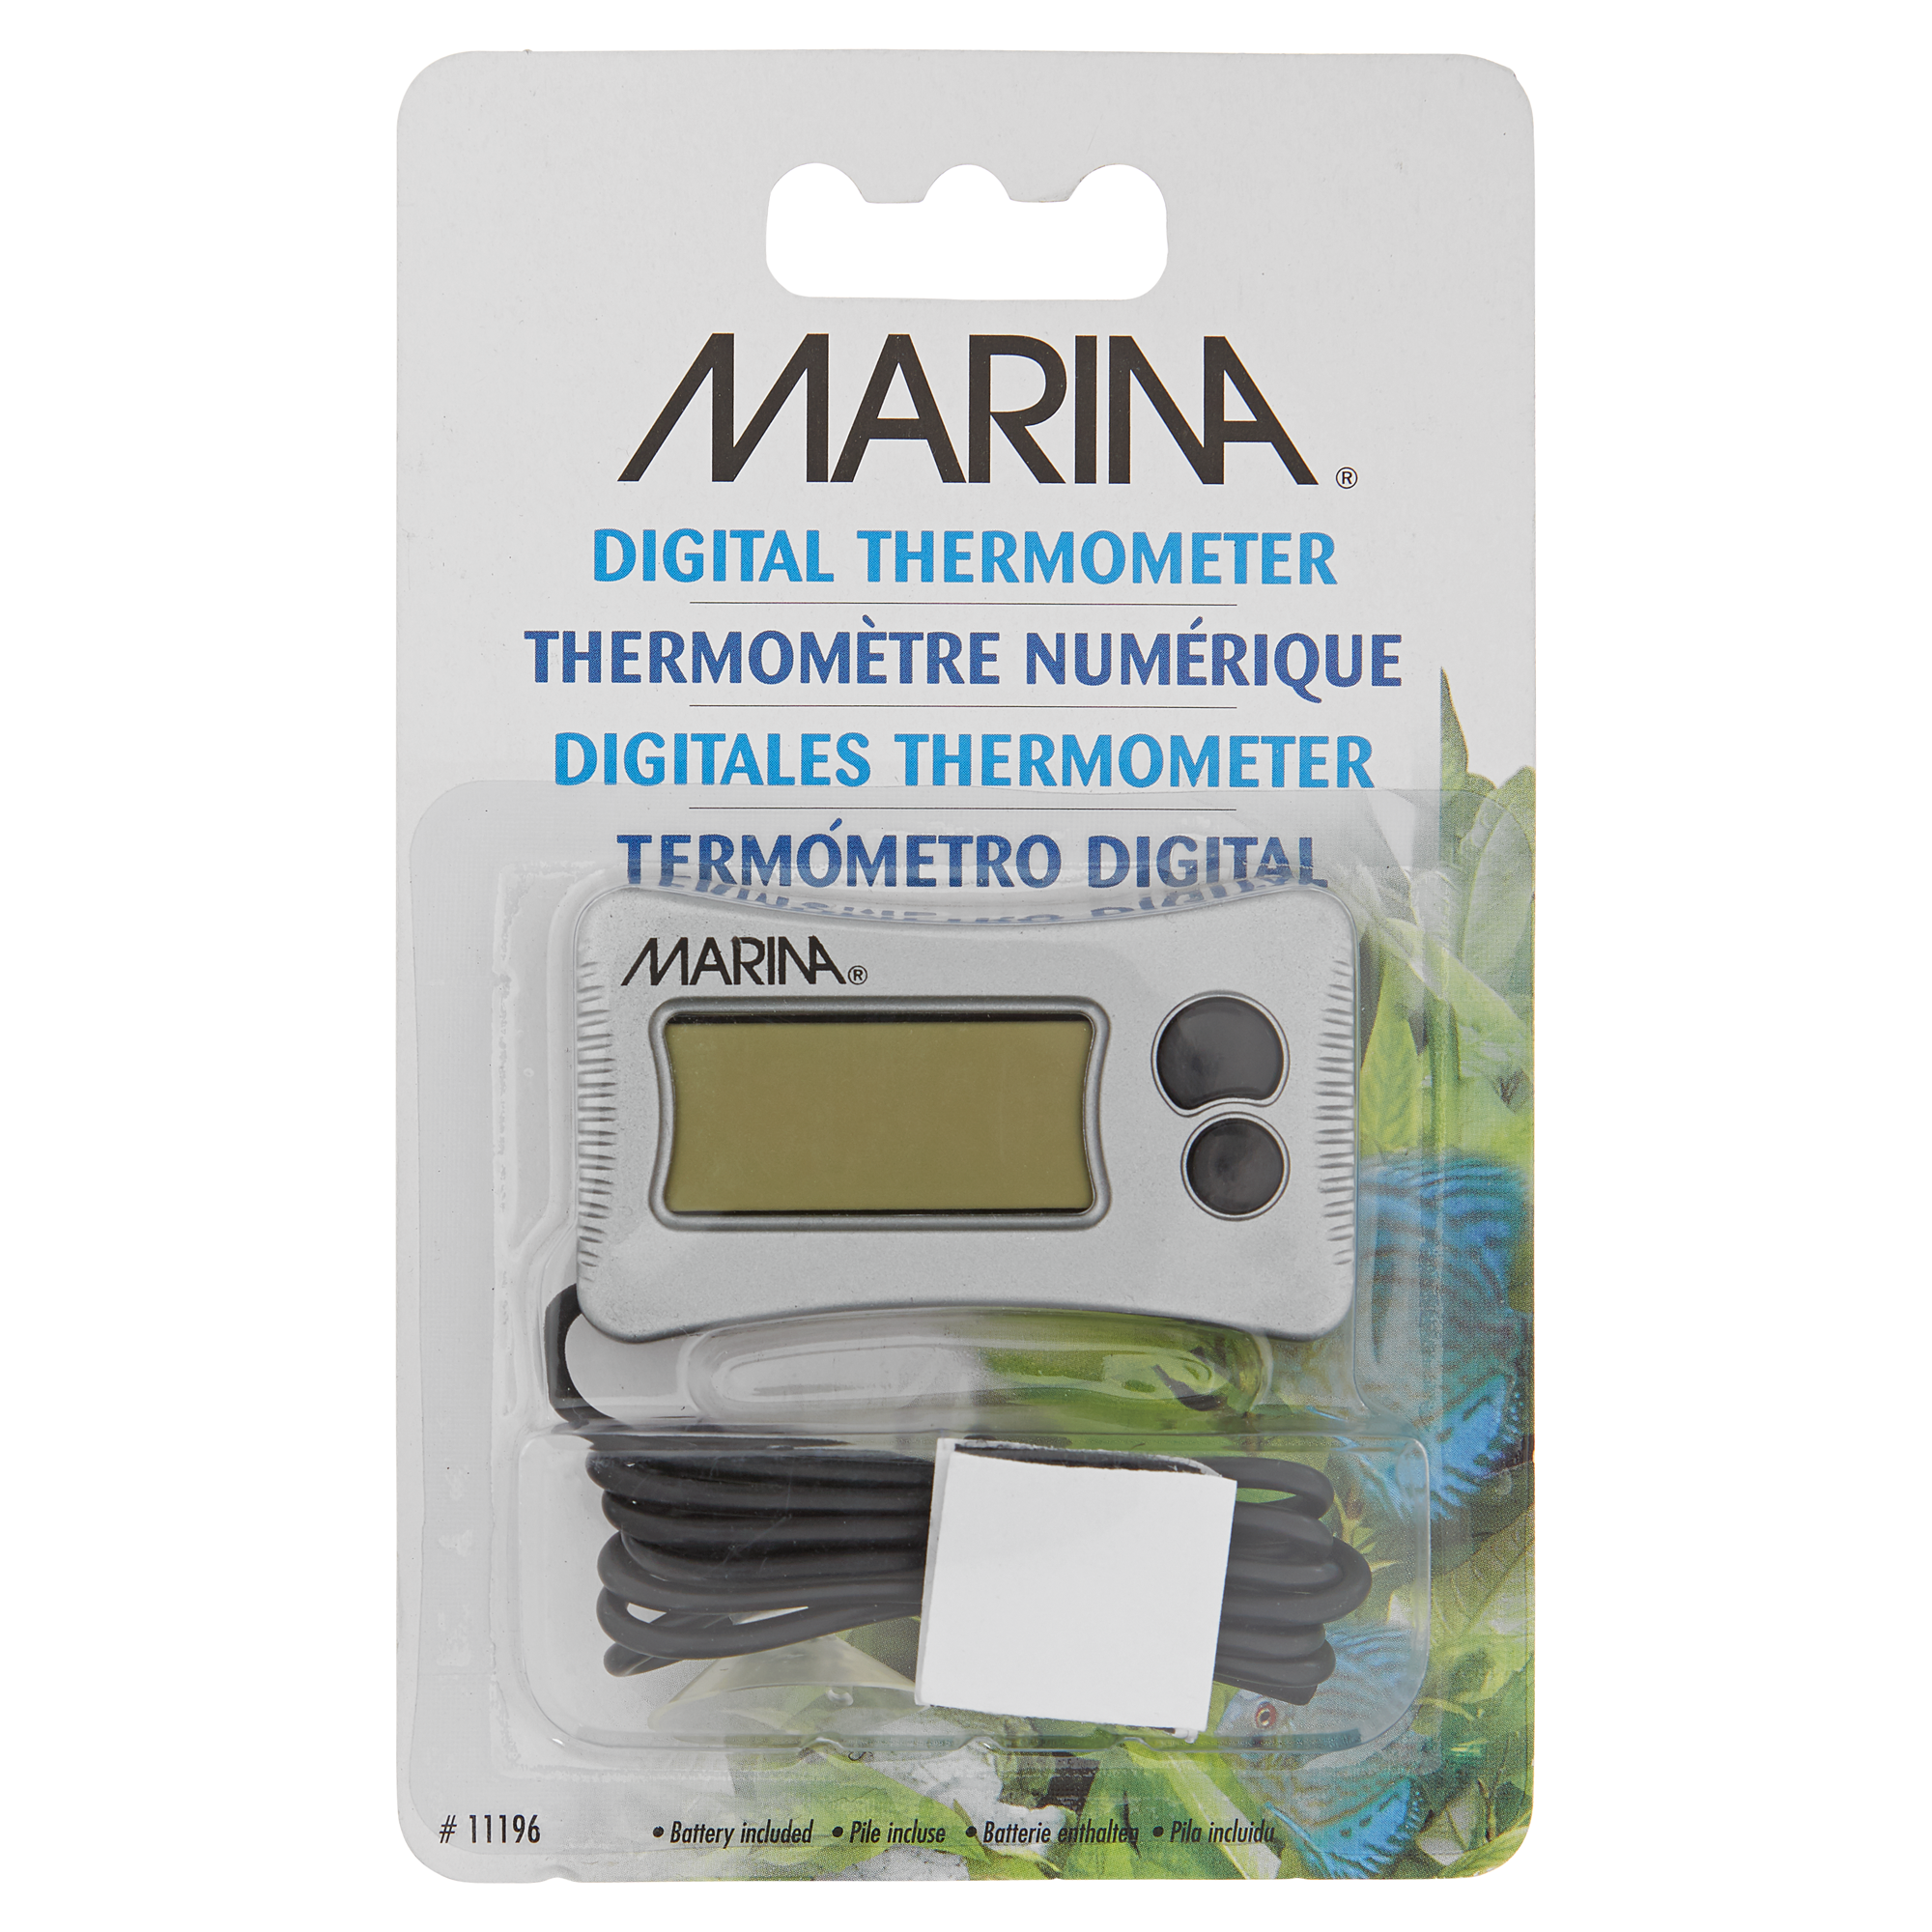 Digitales Thermometer für Aquarien und Terrarien + product picture